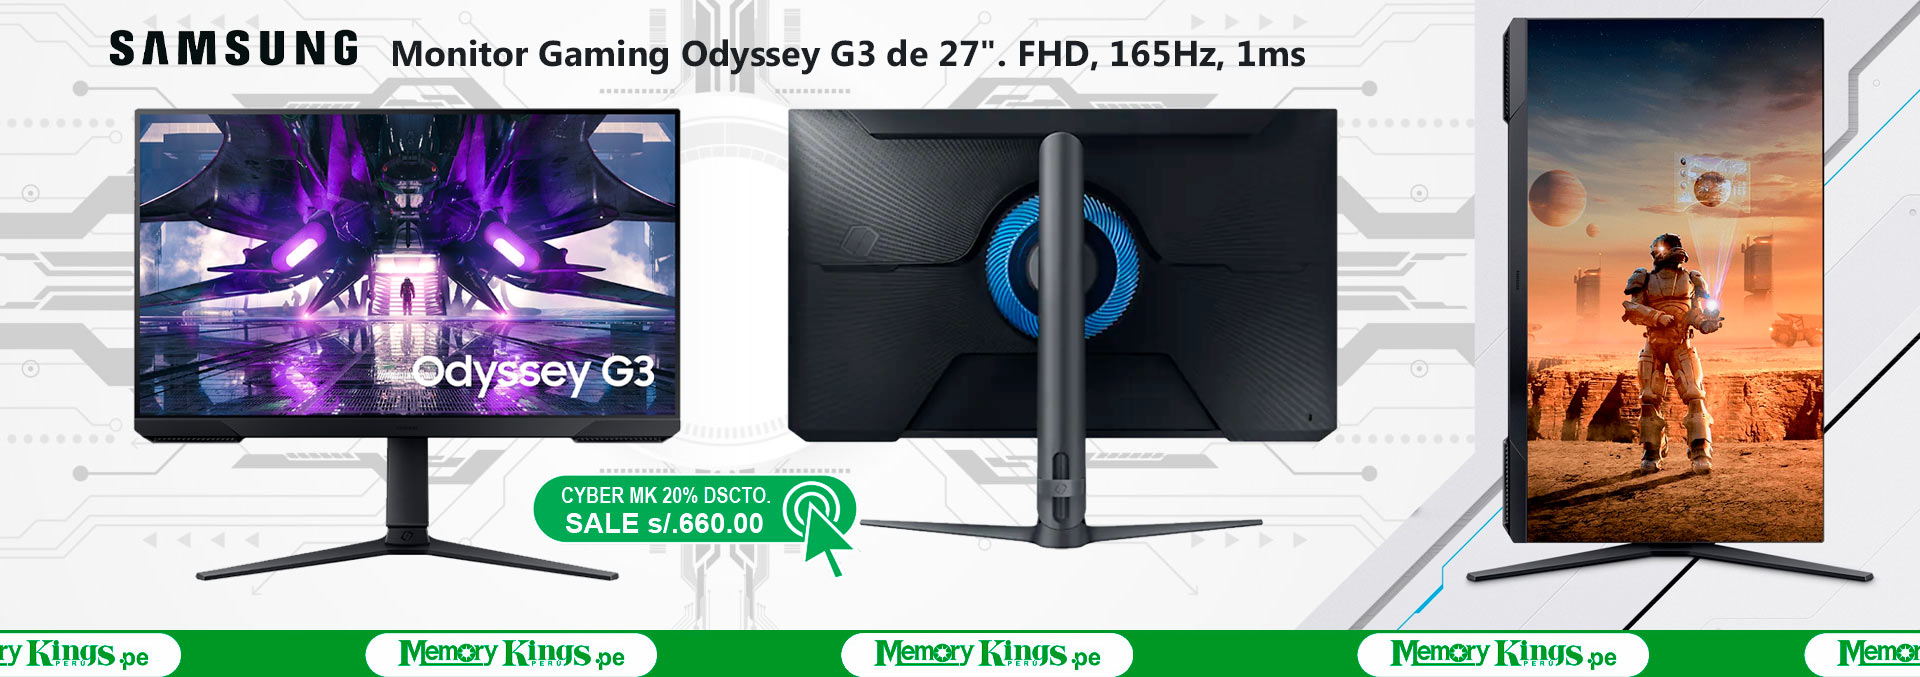 031645 - MONITOR 27 SAMSUNG Gaming Odyssey G3 FHD 165Hz 1m